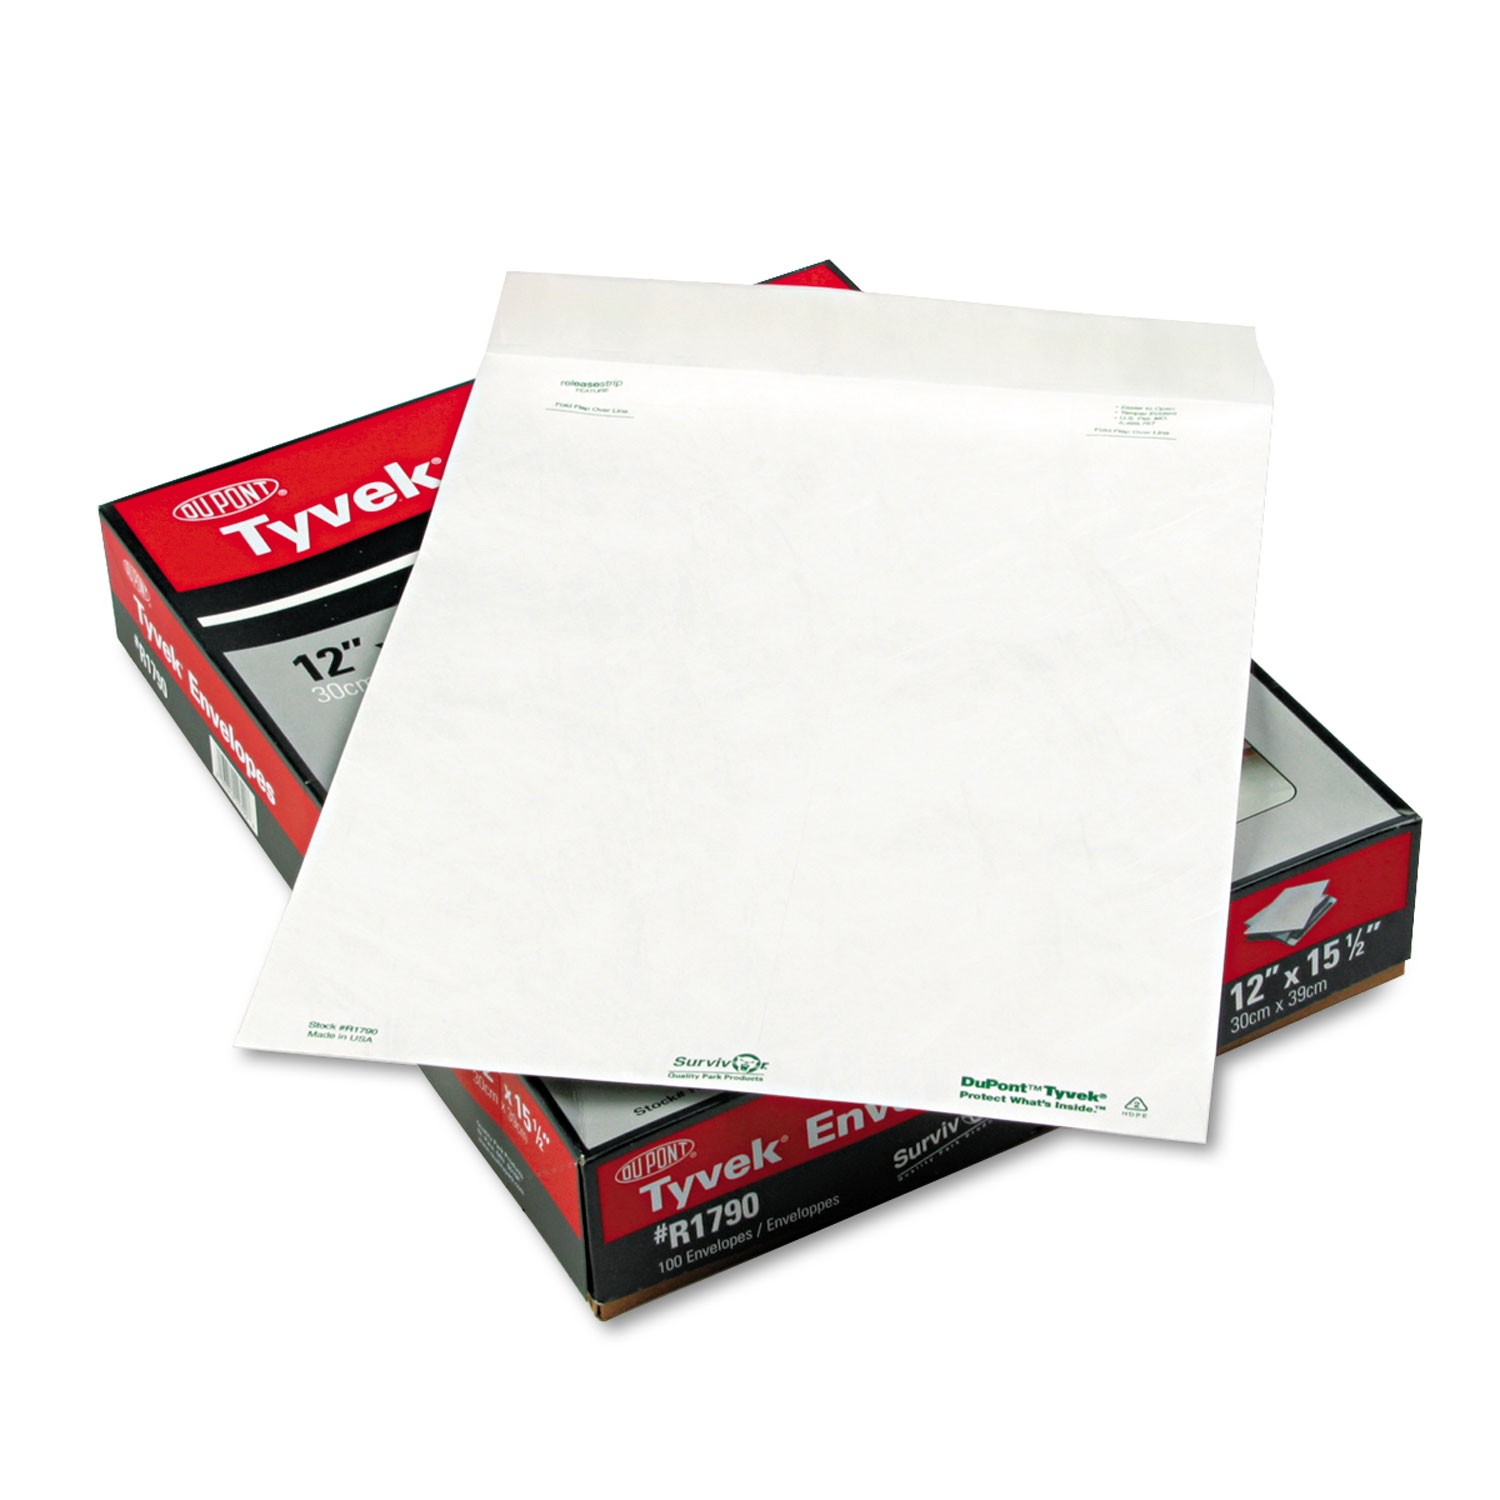  Survivor QUAR1790 Catalog Mailers, DuPont Tyvek, #15 1/2, Cheese Blade Flap, Self-Adhesive Closure, 12 x 16, White, 100/Box (QUAR1790) 